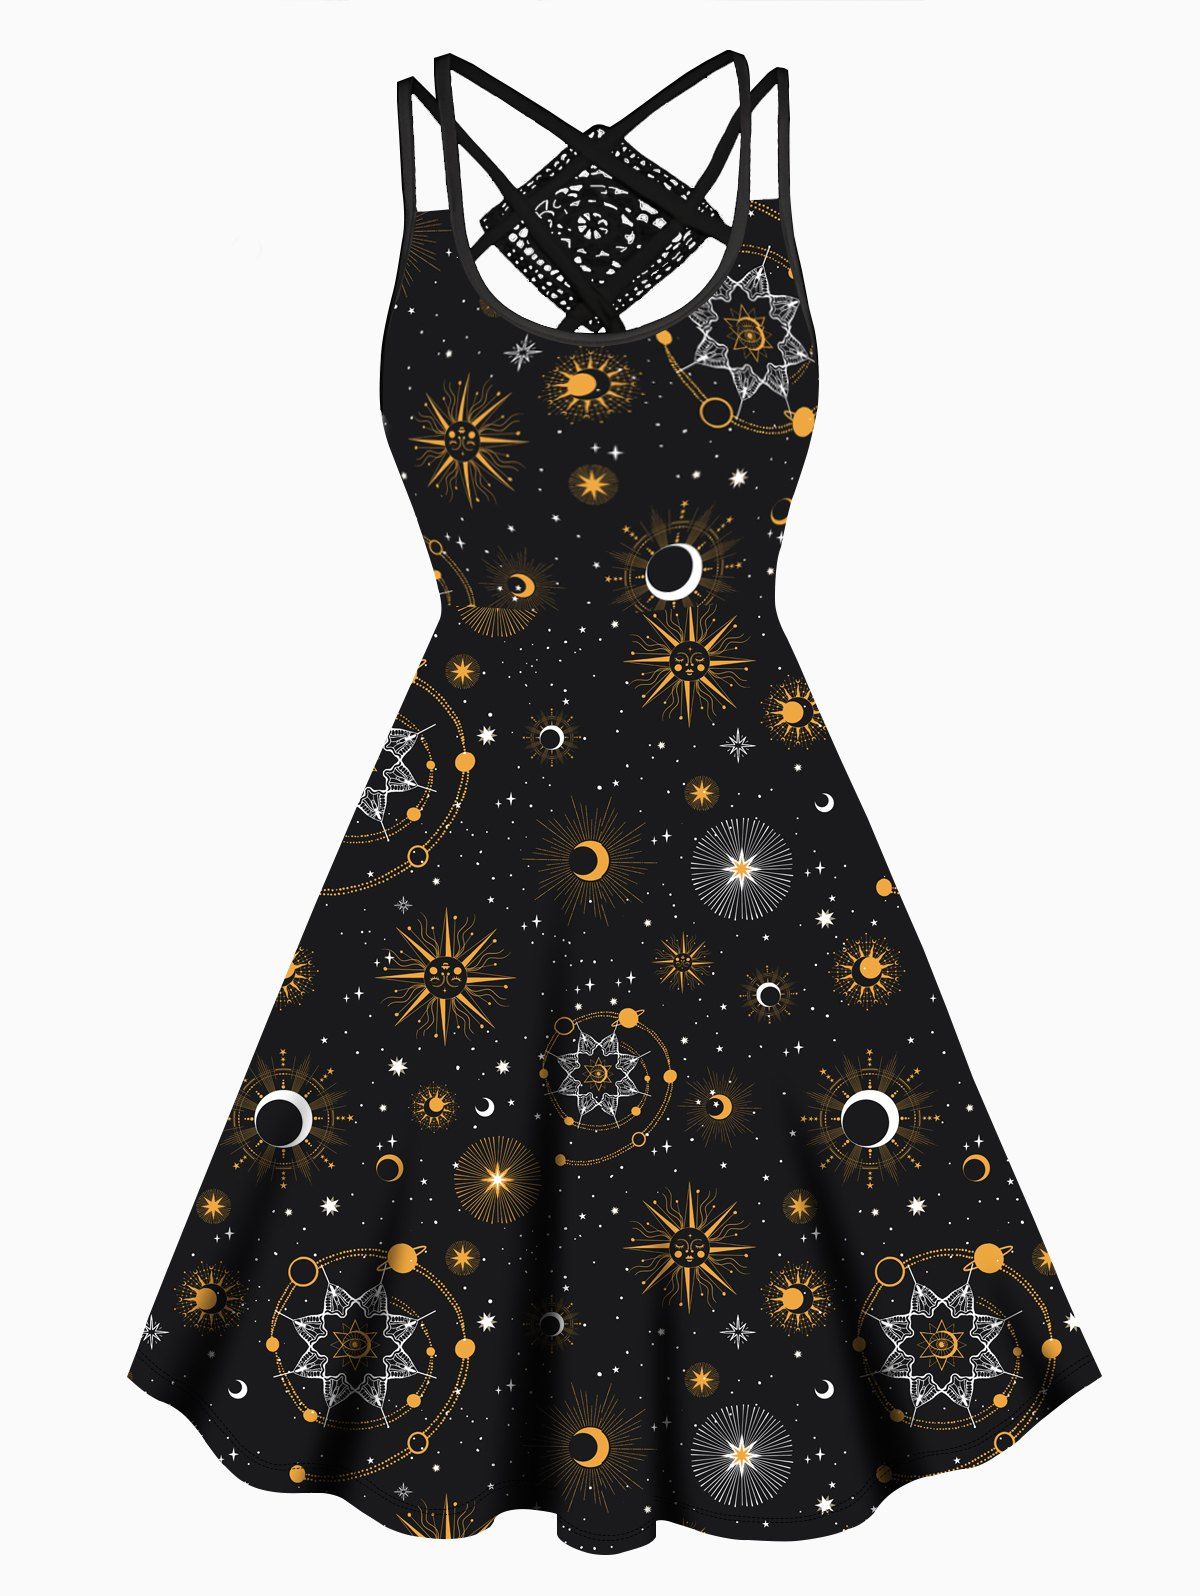 Celestial Galaxy Sun Moon Star Print Dress Lace Panel Crisscross High Waisted Sleeveless A Line Midi Dress - BLACK M